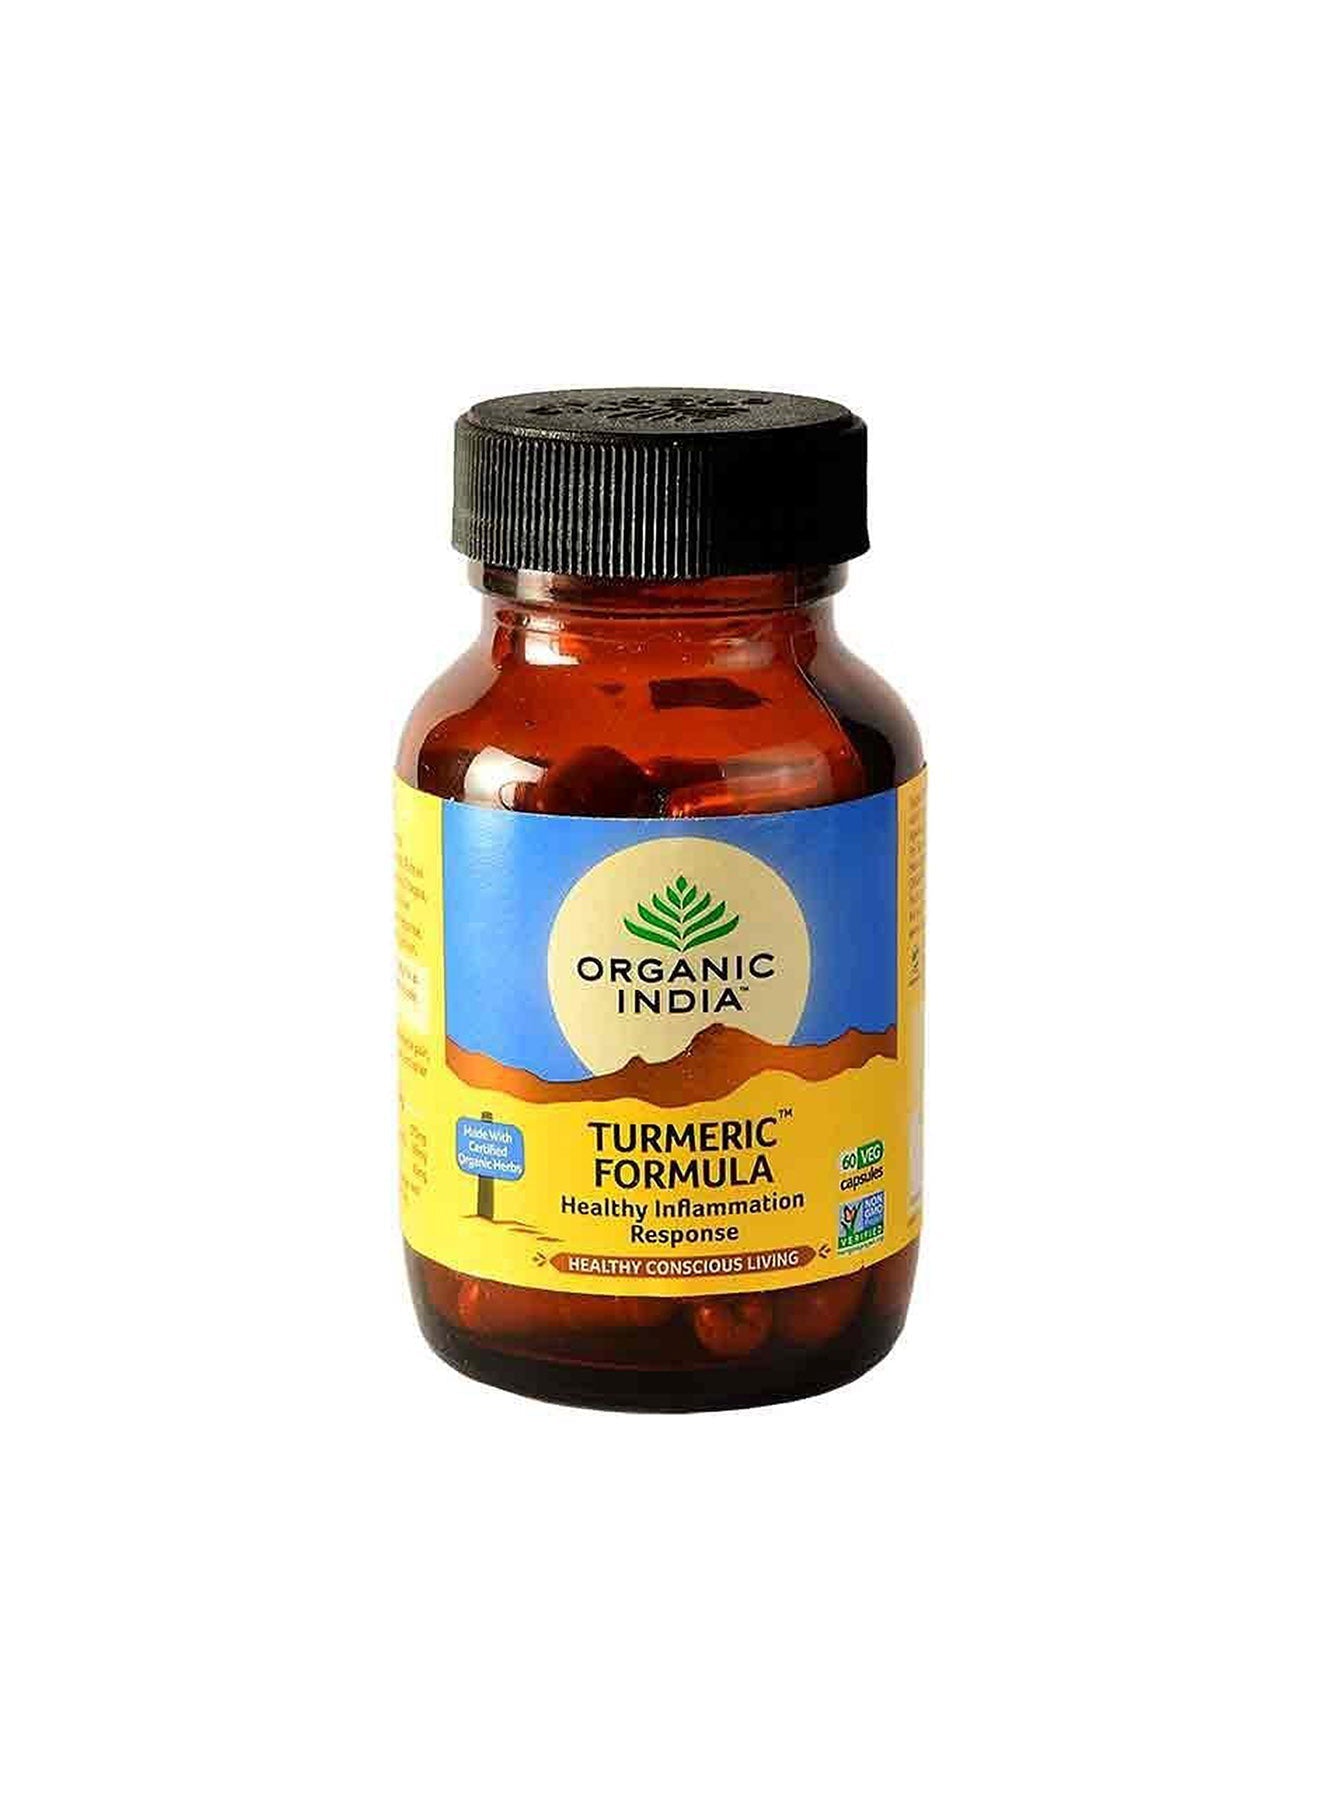 Organic India Turmeric Formula 60 Capsules Bottle Value Pack of 12 